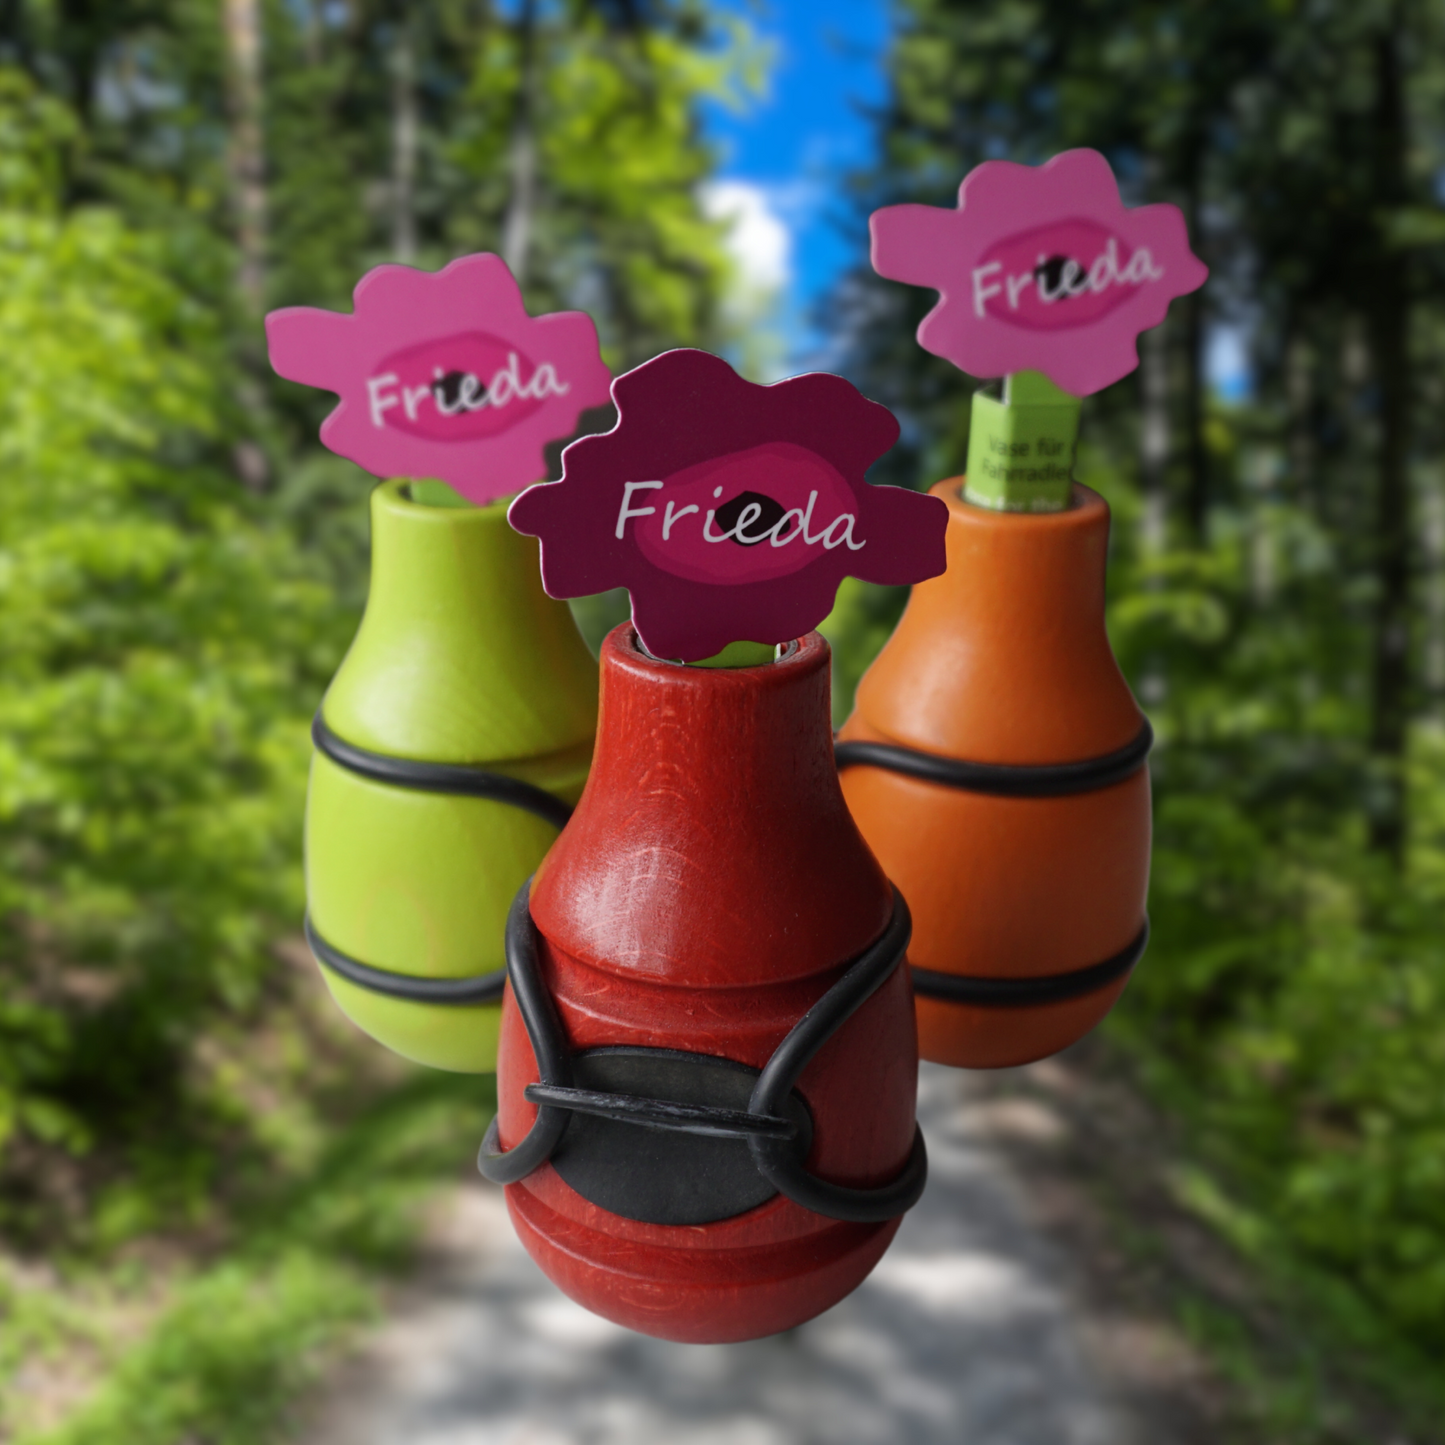 Fahrrad-Vase "Frieda"